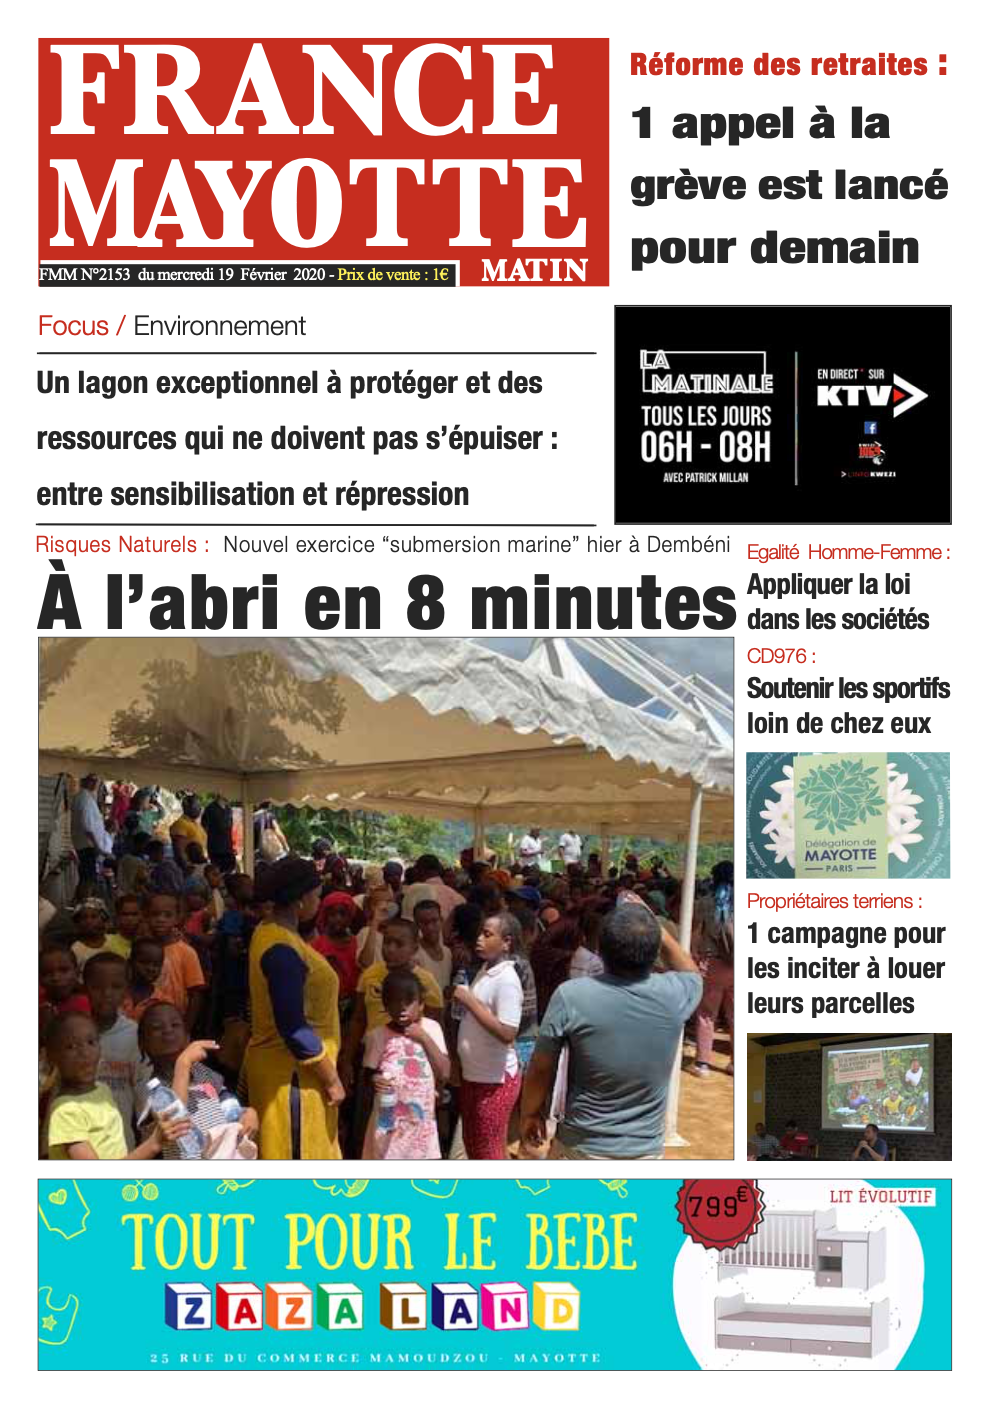 France Mayotte Mercredi 19 février 2020